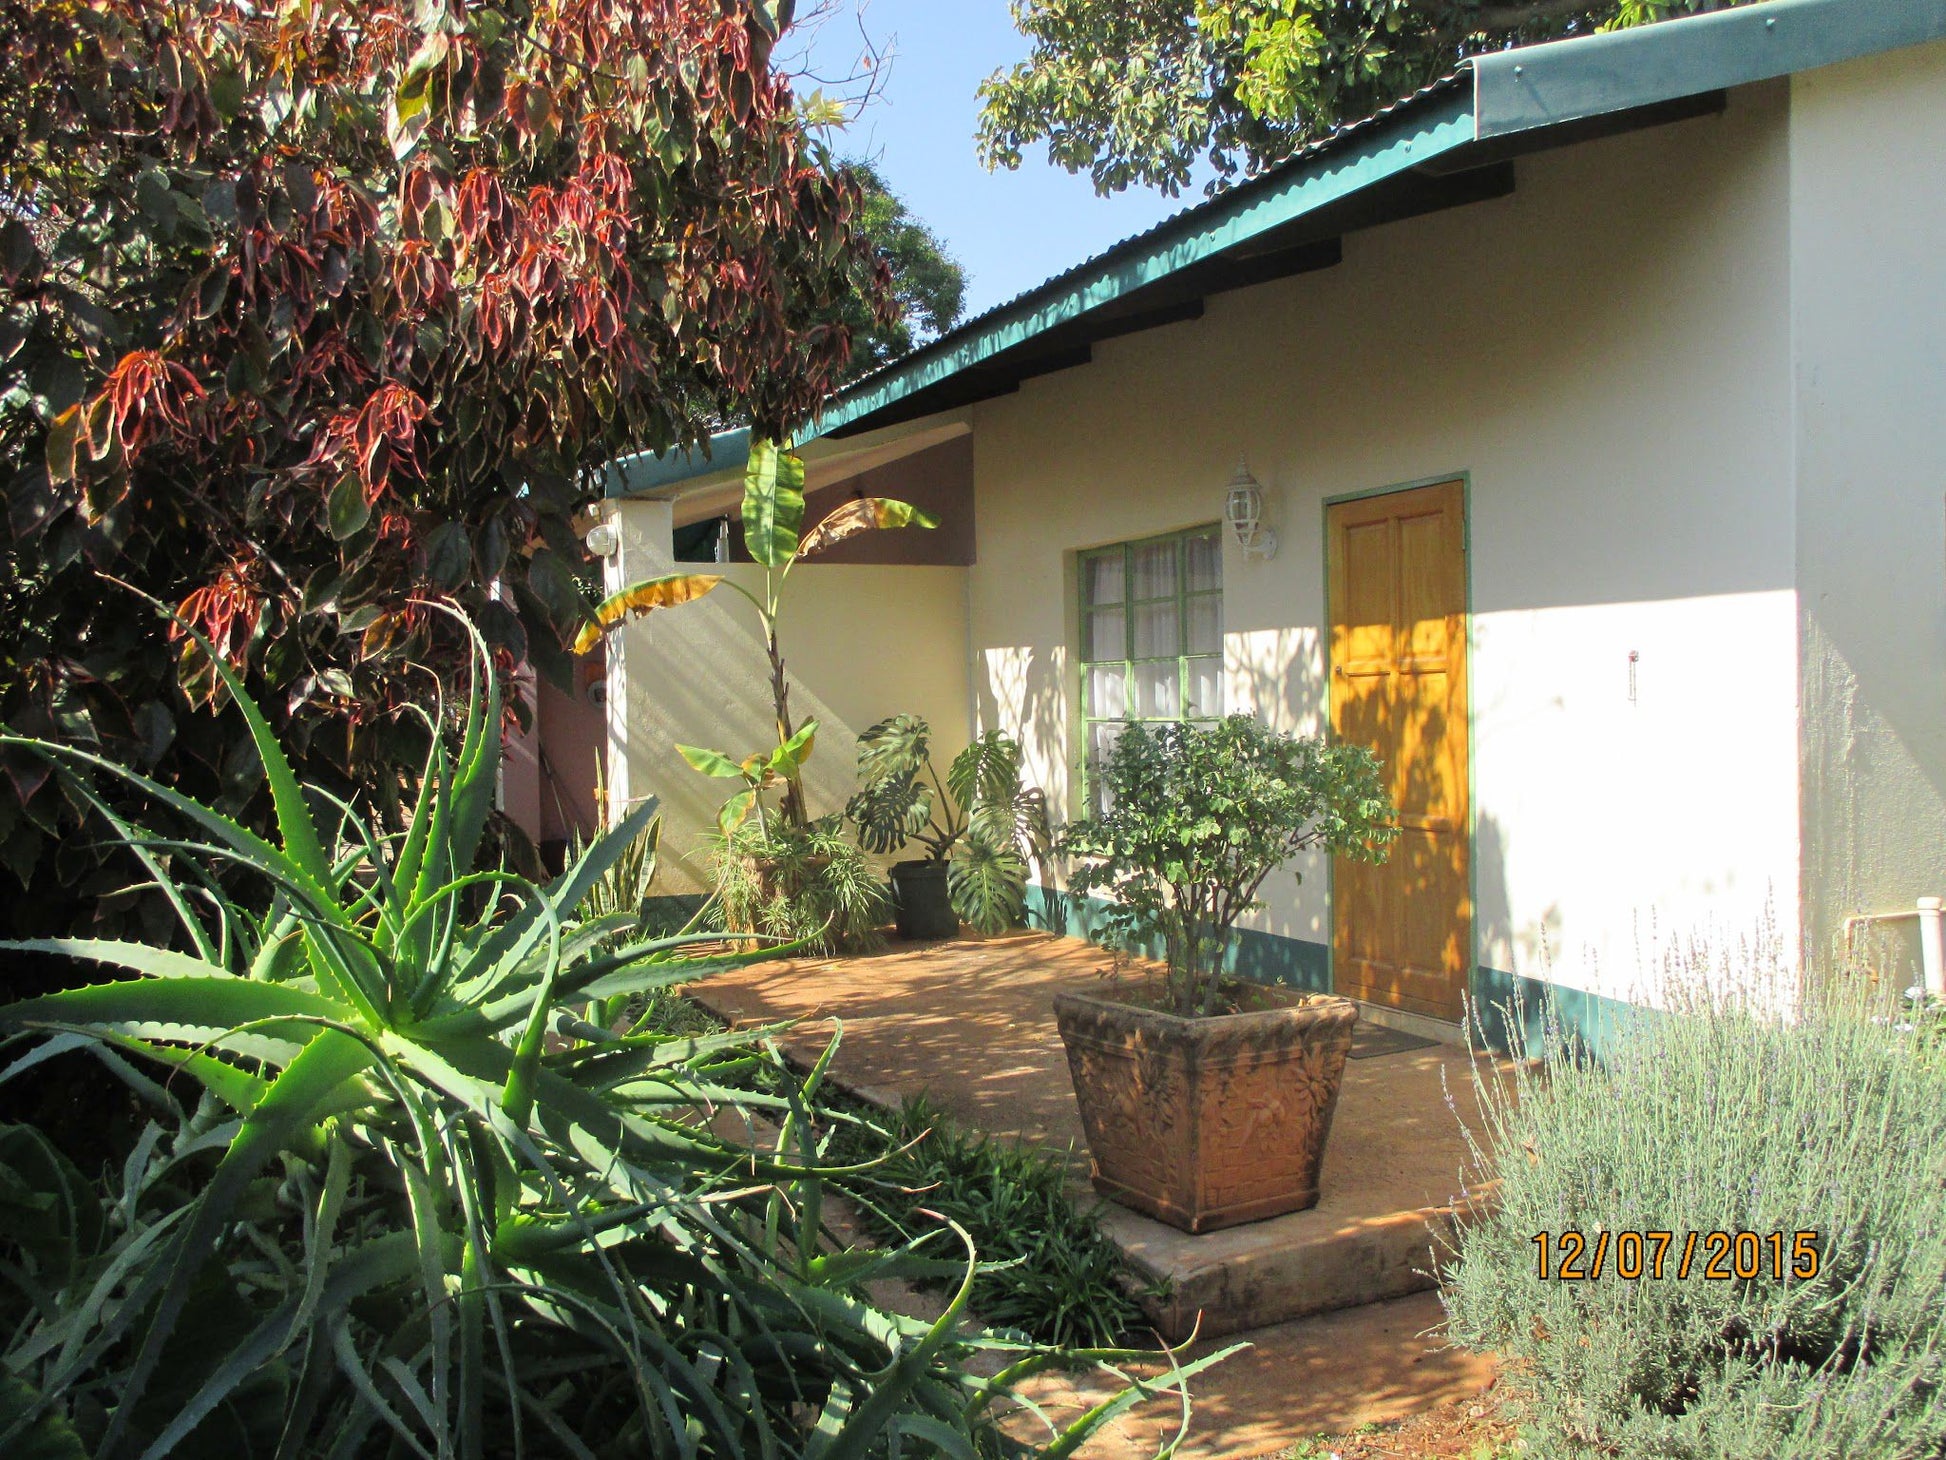 Lutea Guest House Mokopane Potgietersrus Limpopo Province South Africa House, Building, Architecture, Palm Tree, Plant, Nature, Wood